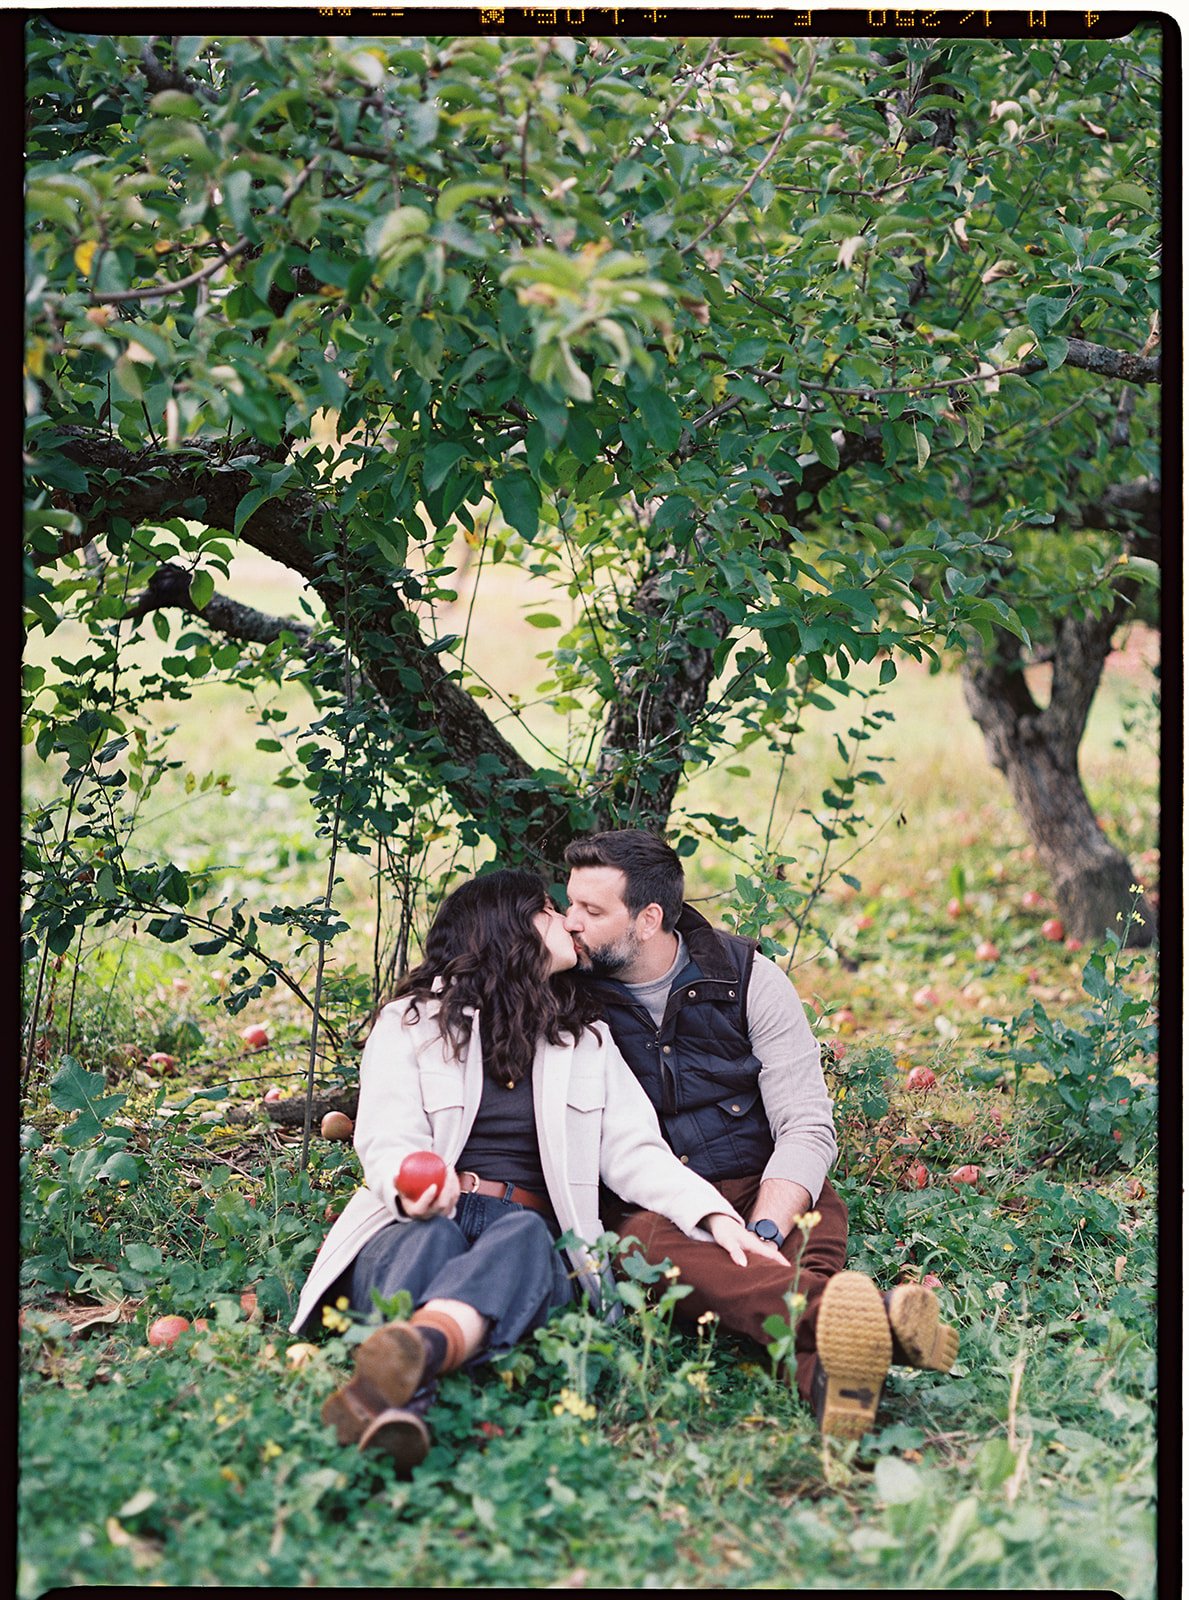 An Apple Picking Wedding Welcome Party - Destination Wedding Photographer - Film  (19).jpg